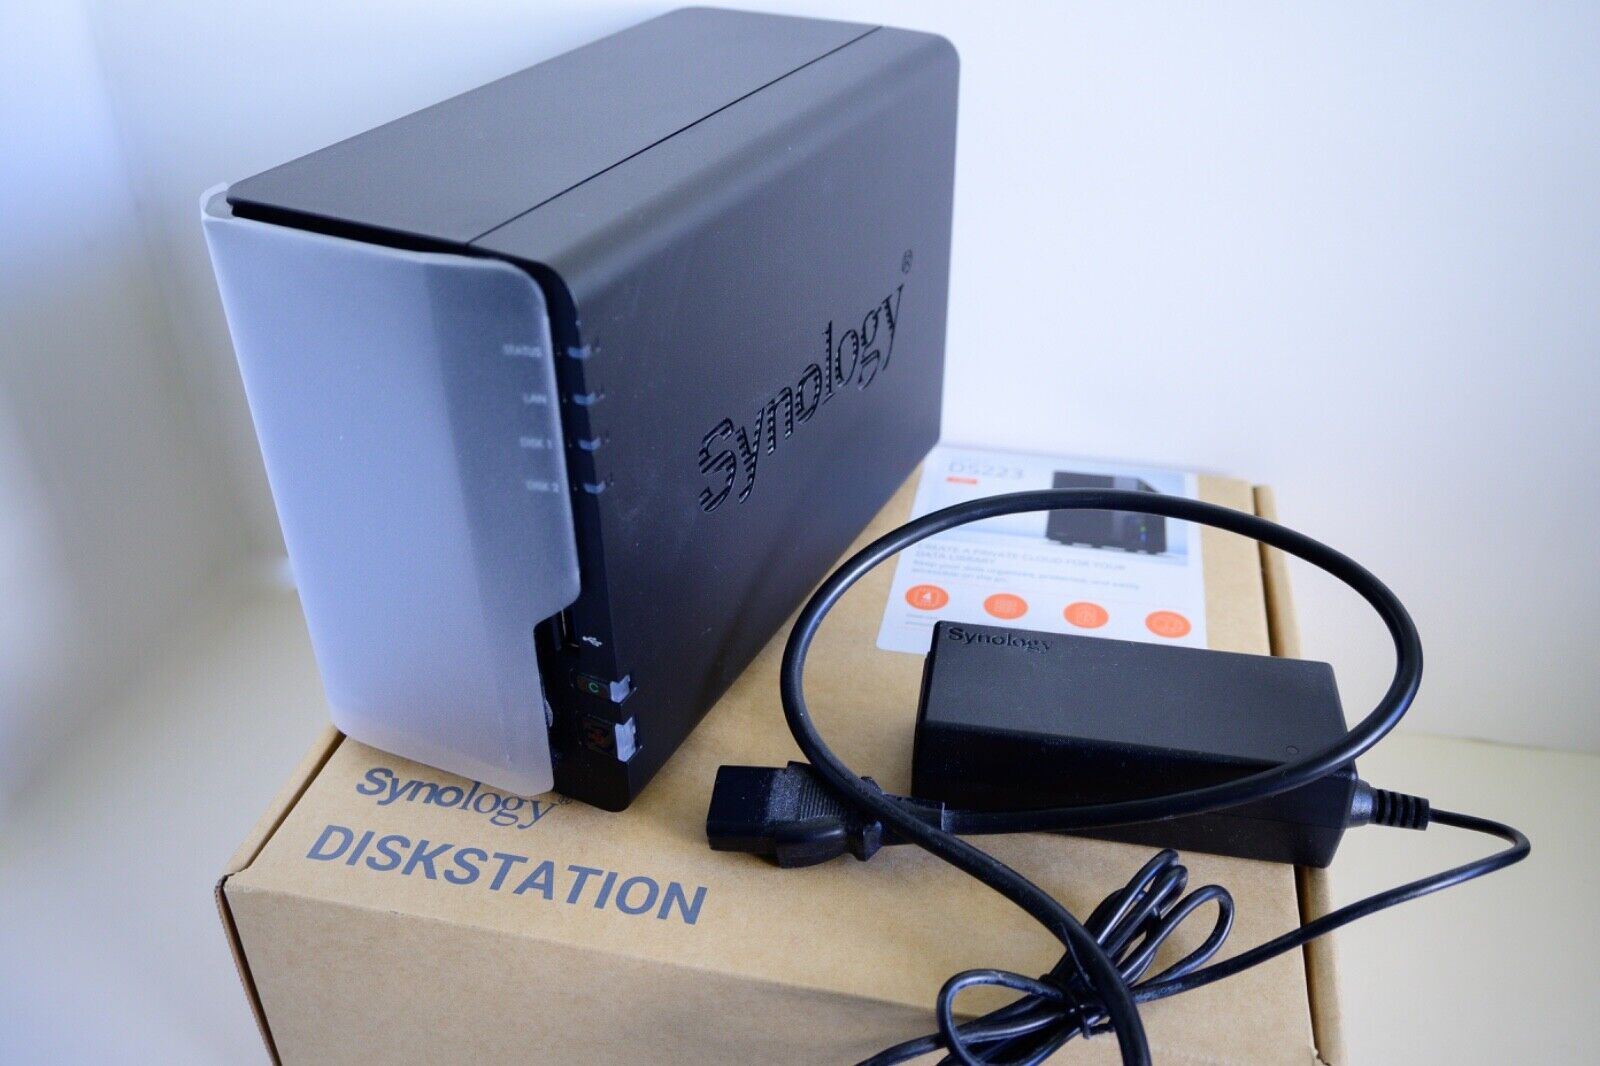 Synology 2-bay DiskStation DS223 (Diskless) Personal Cloud NAS Unit for Backups